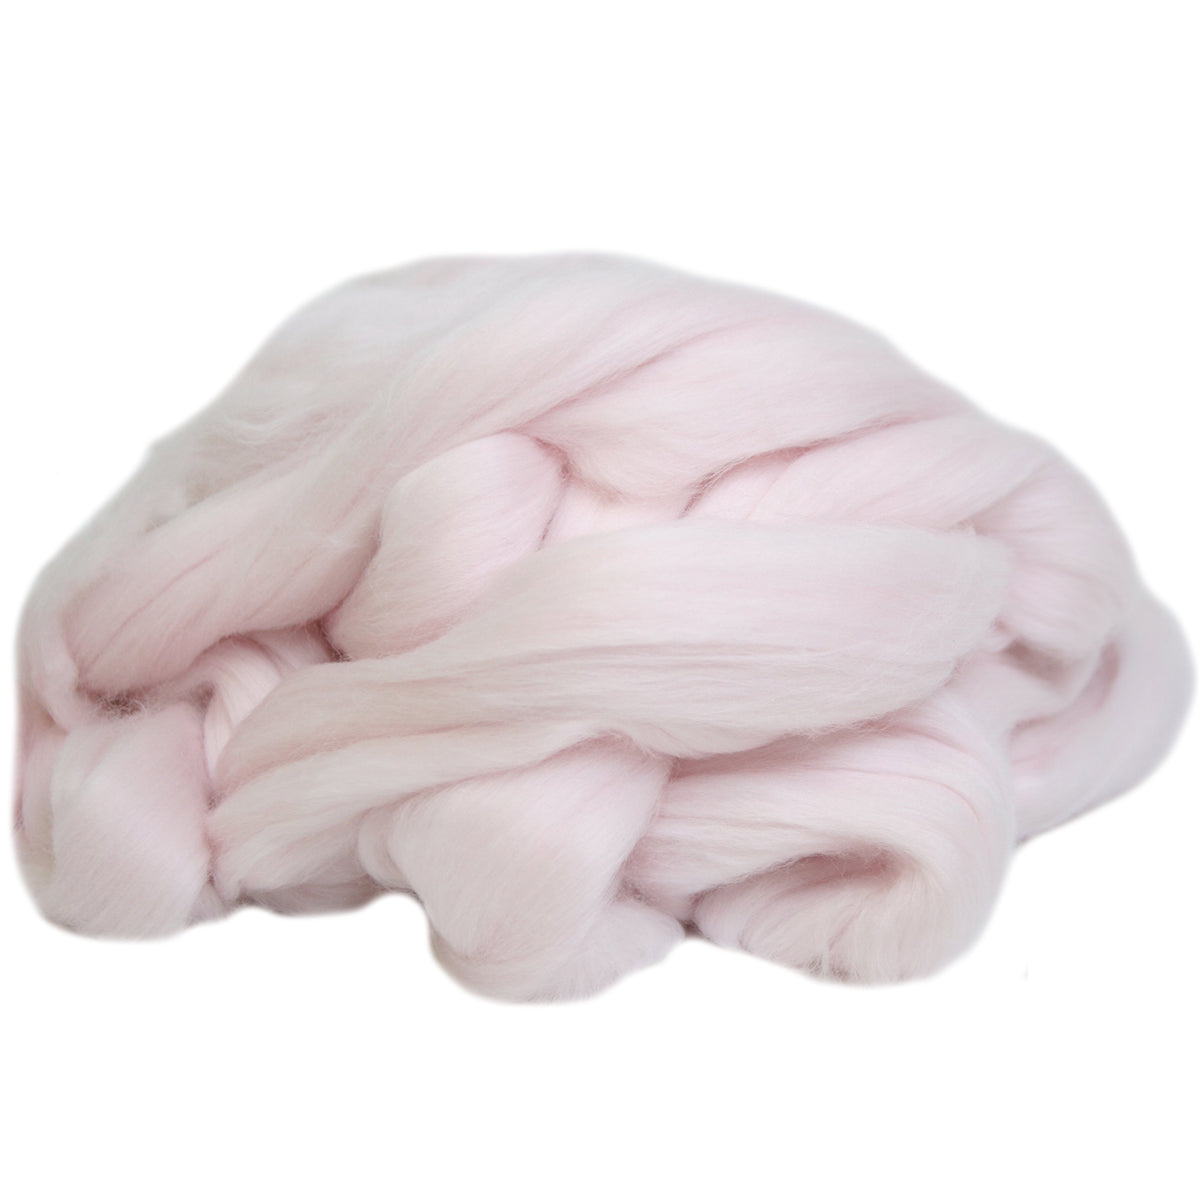 Merino Wool Top Pink Lace 1950g